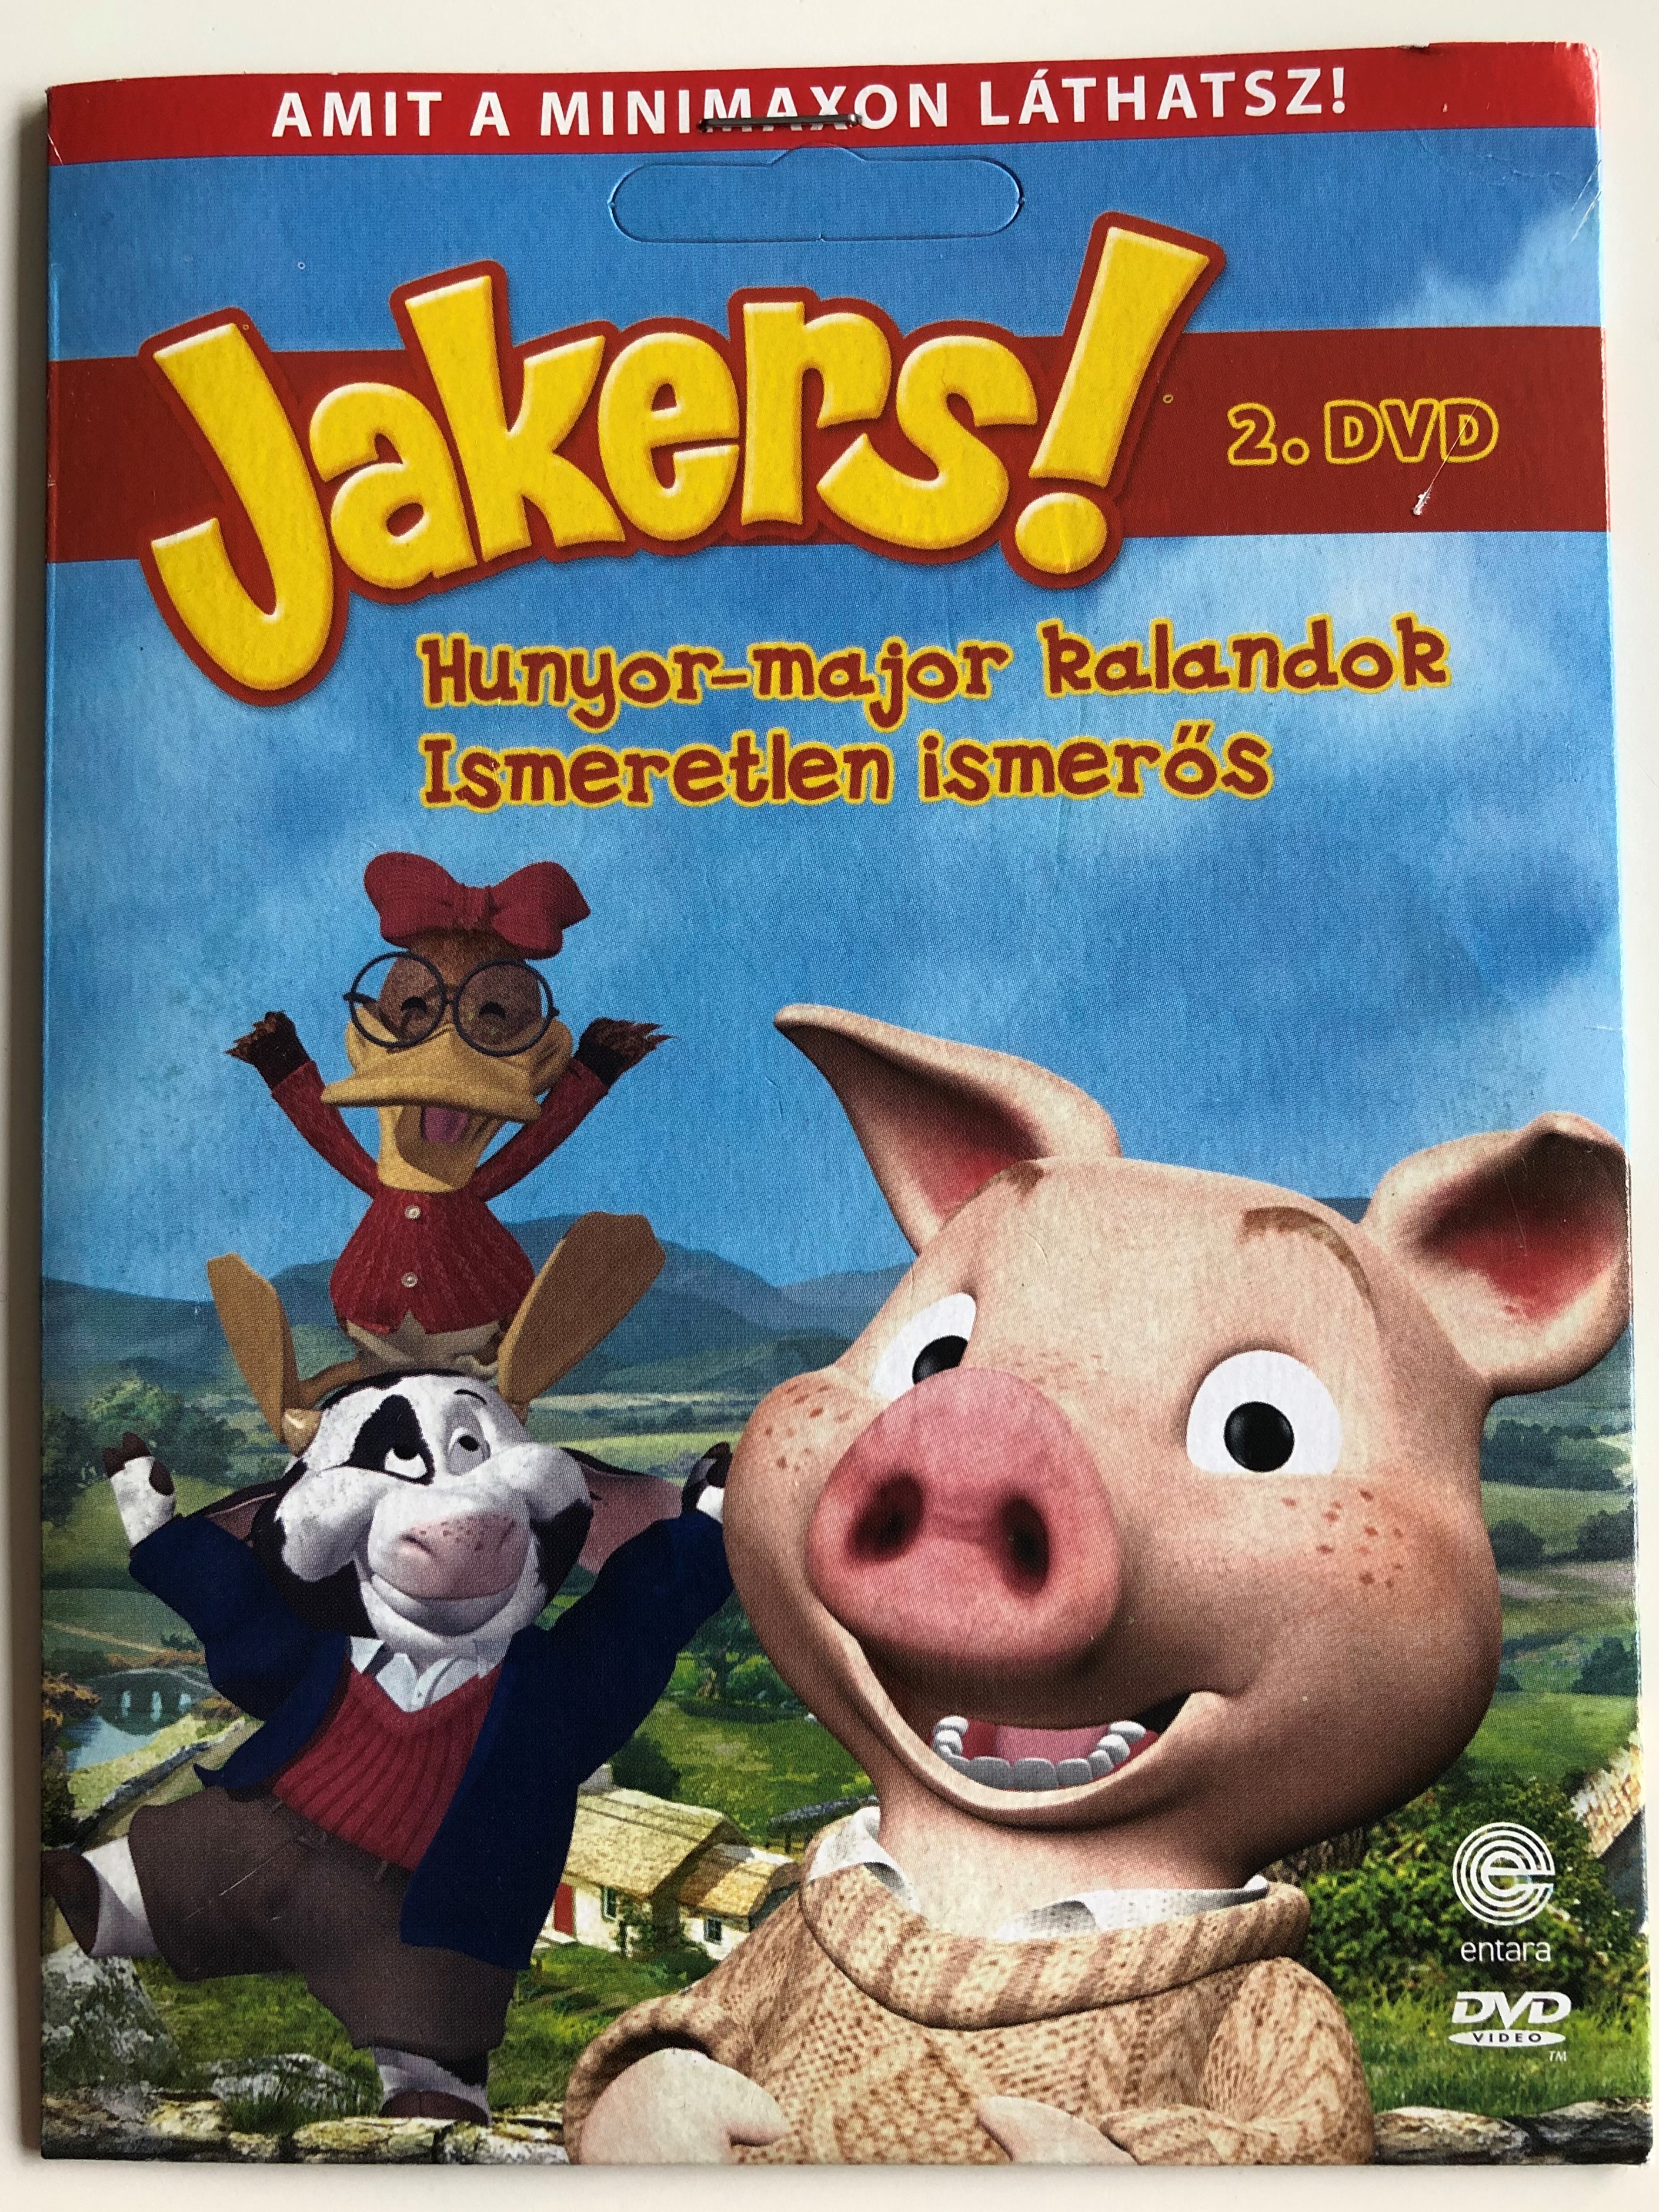 Jakers! The Adventures of Piggley Winks Disc 2 DVD 2003 1.JPG